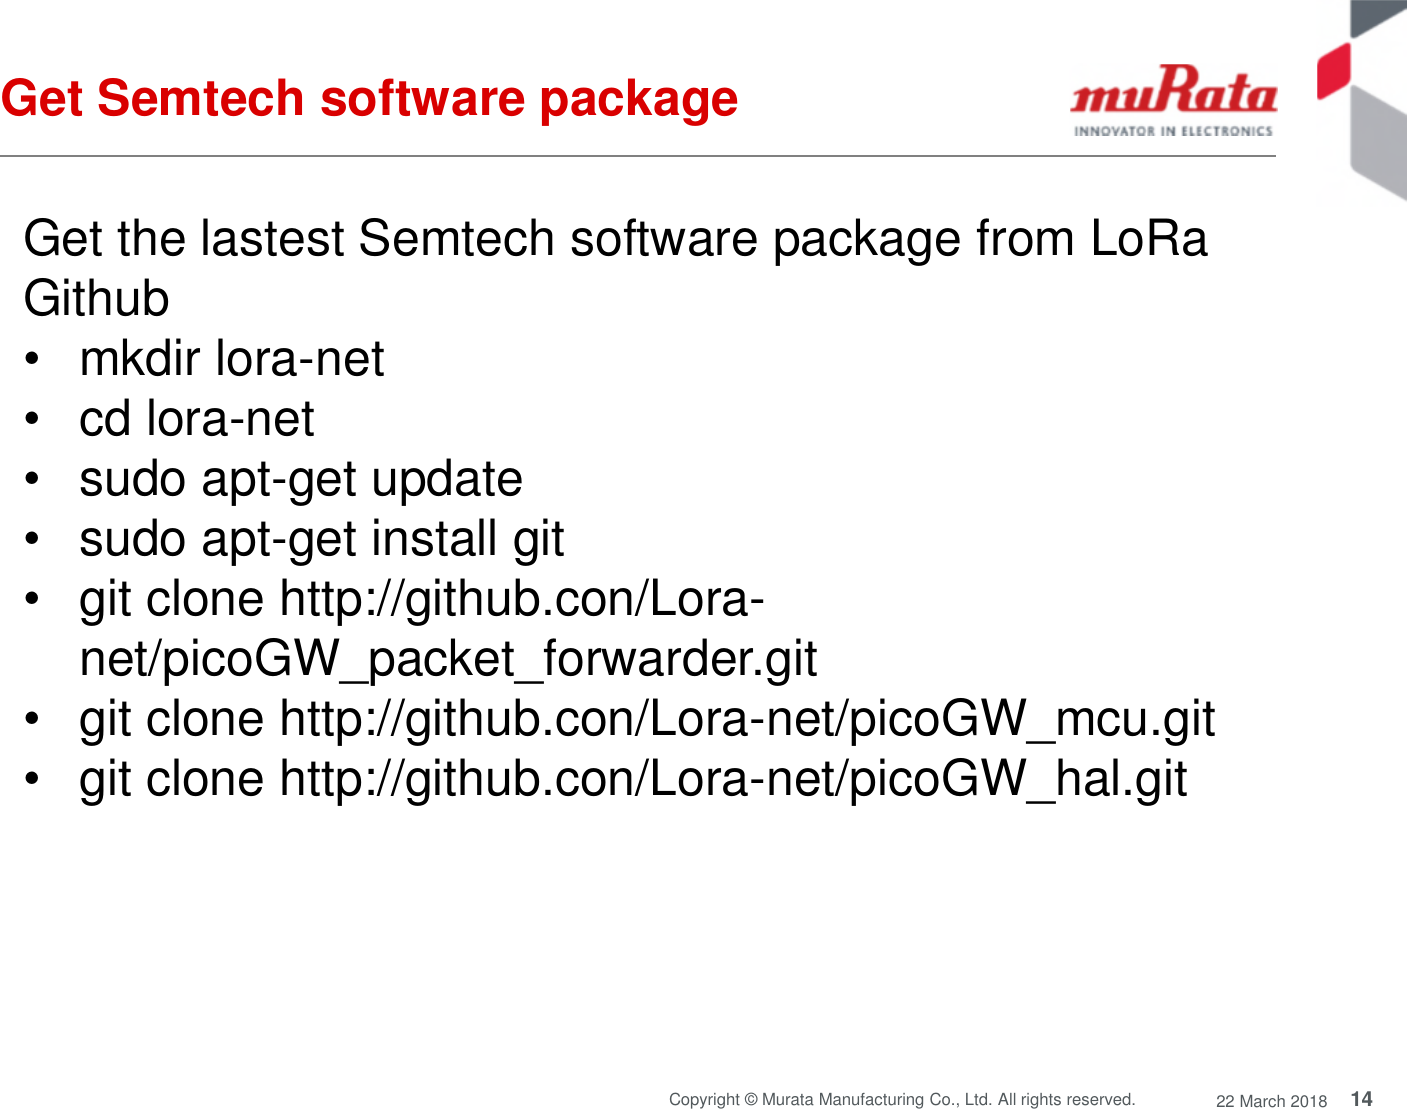 14Copyright © Murata Manufacturing Co., Ltd. All rights reserved. 22 March 2018Get Semtech software packageGet the lastest Semtech software package from LoRaGithub• mkdir lora-net• cd lora-net• sudo apt-get update• sudo apt-get install git• git clone http://github.con/Lora-net/picoGW_packet_forwarder.git• git clone http://github.con/Lora-net/picoGW_mcu.git• git clone http://github.con/Lora-net/picoGW_hal.git